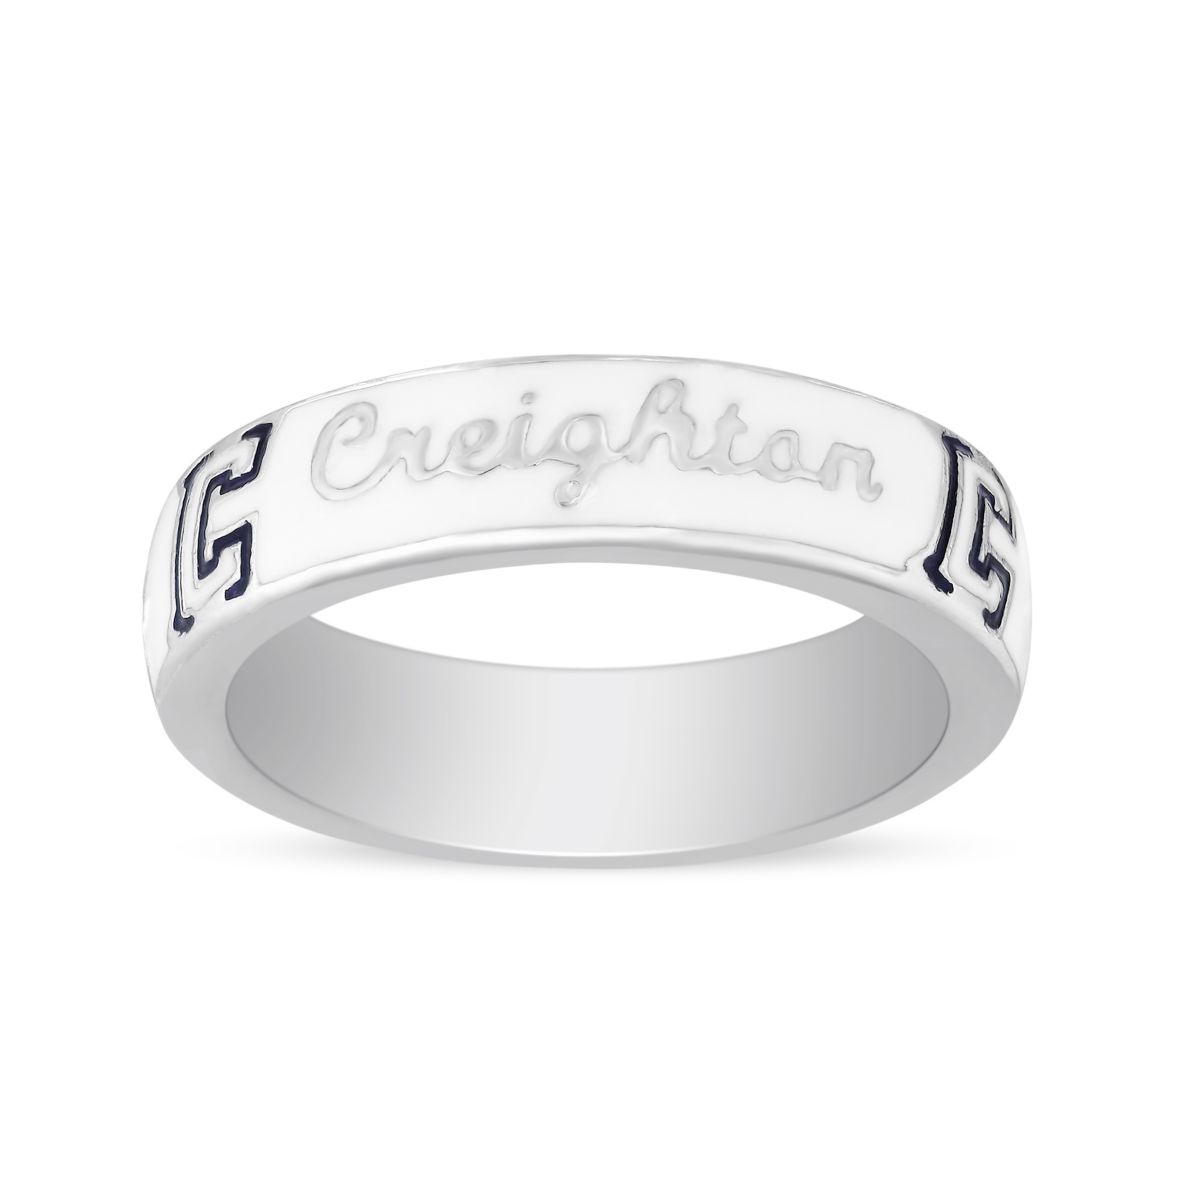 Creighton Bluejays Sterling Silver & White Enamel Ring, Size 5 | Borsheims